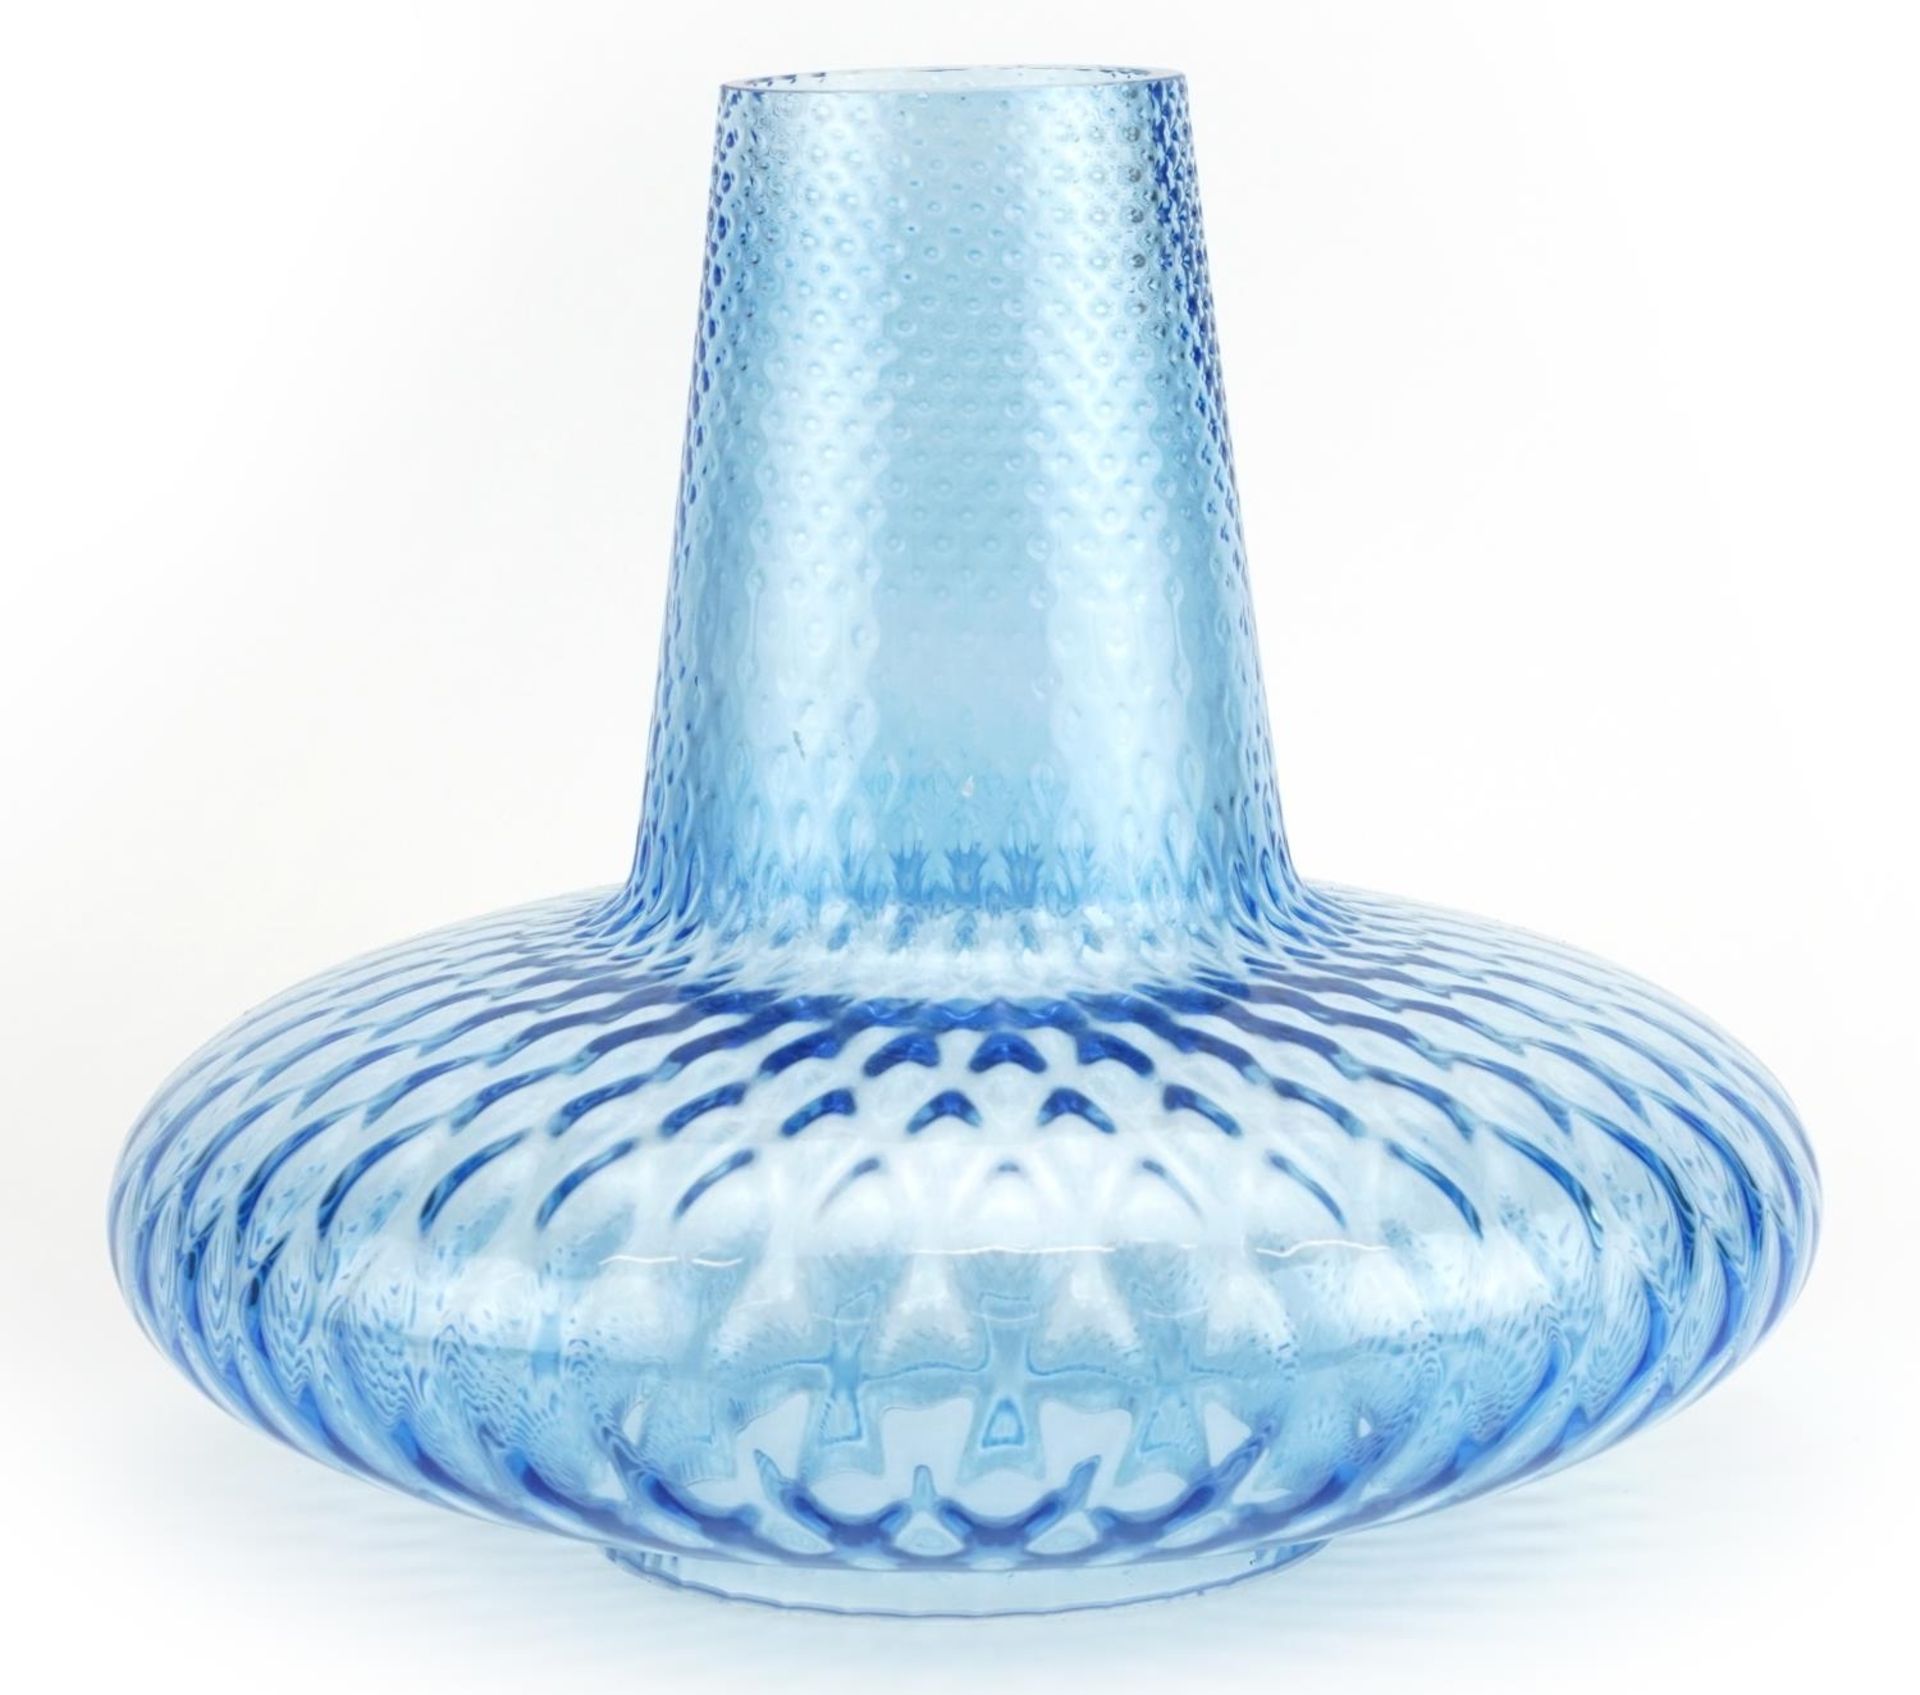 Blue art glass lamp shade, 27cm high x 30cm in diameter